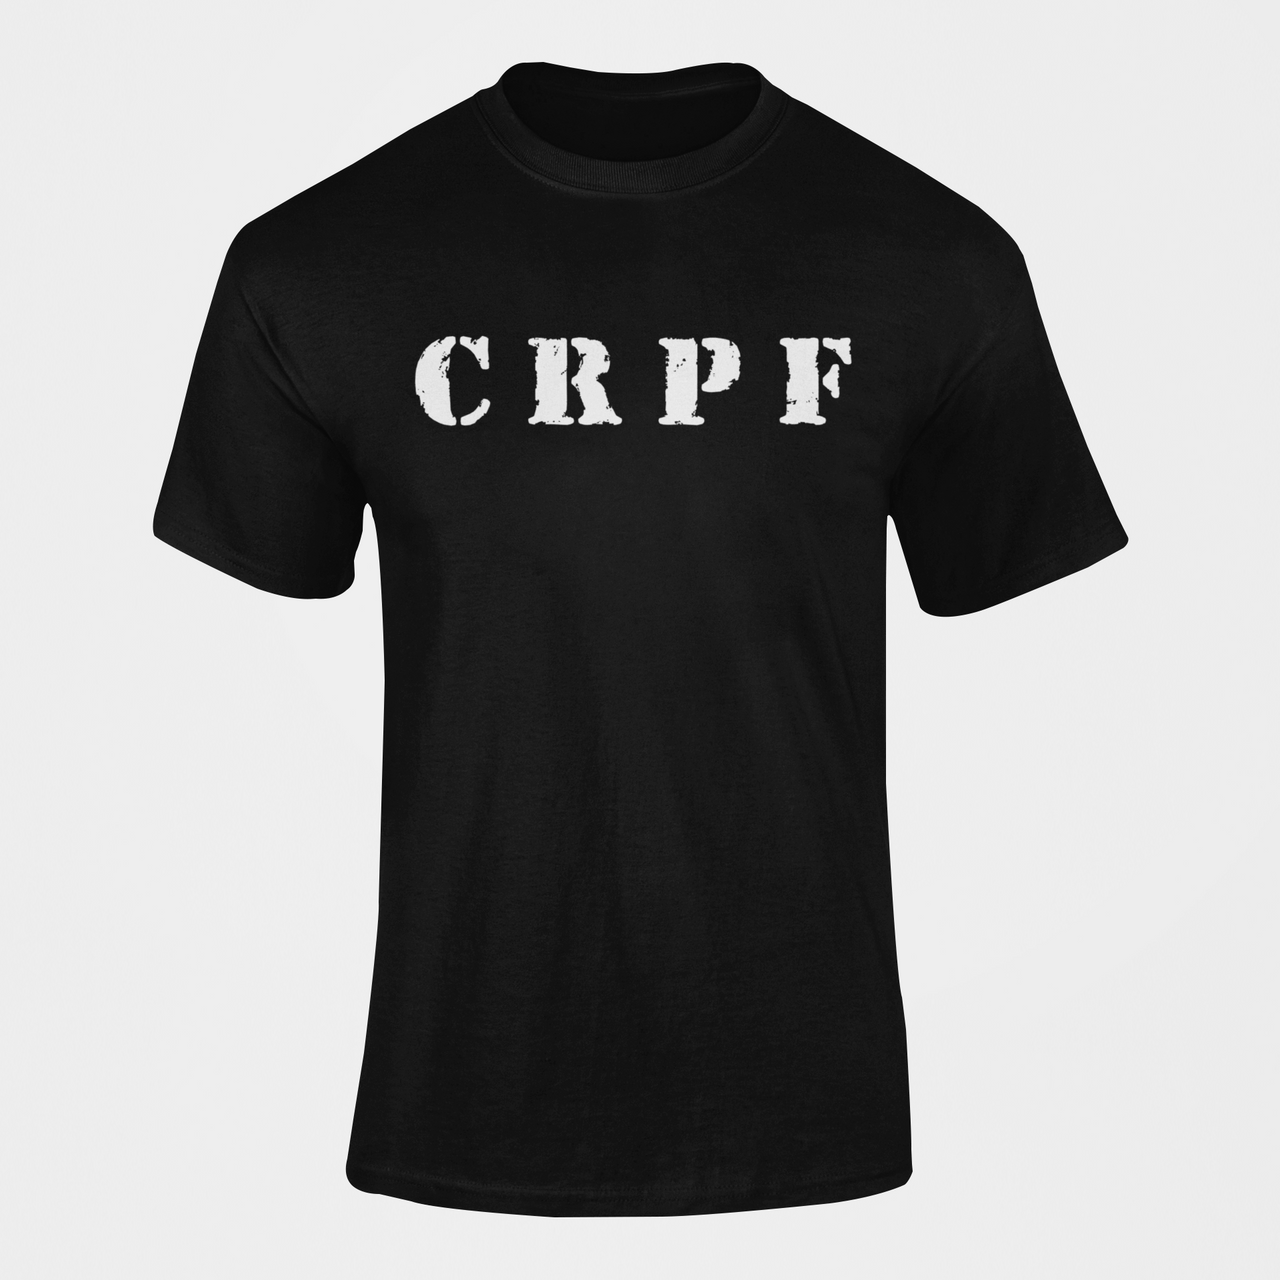 Army T-shirt - CRPF (Men)